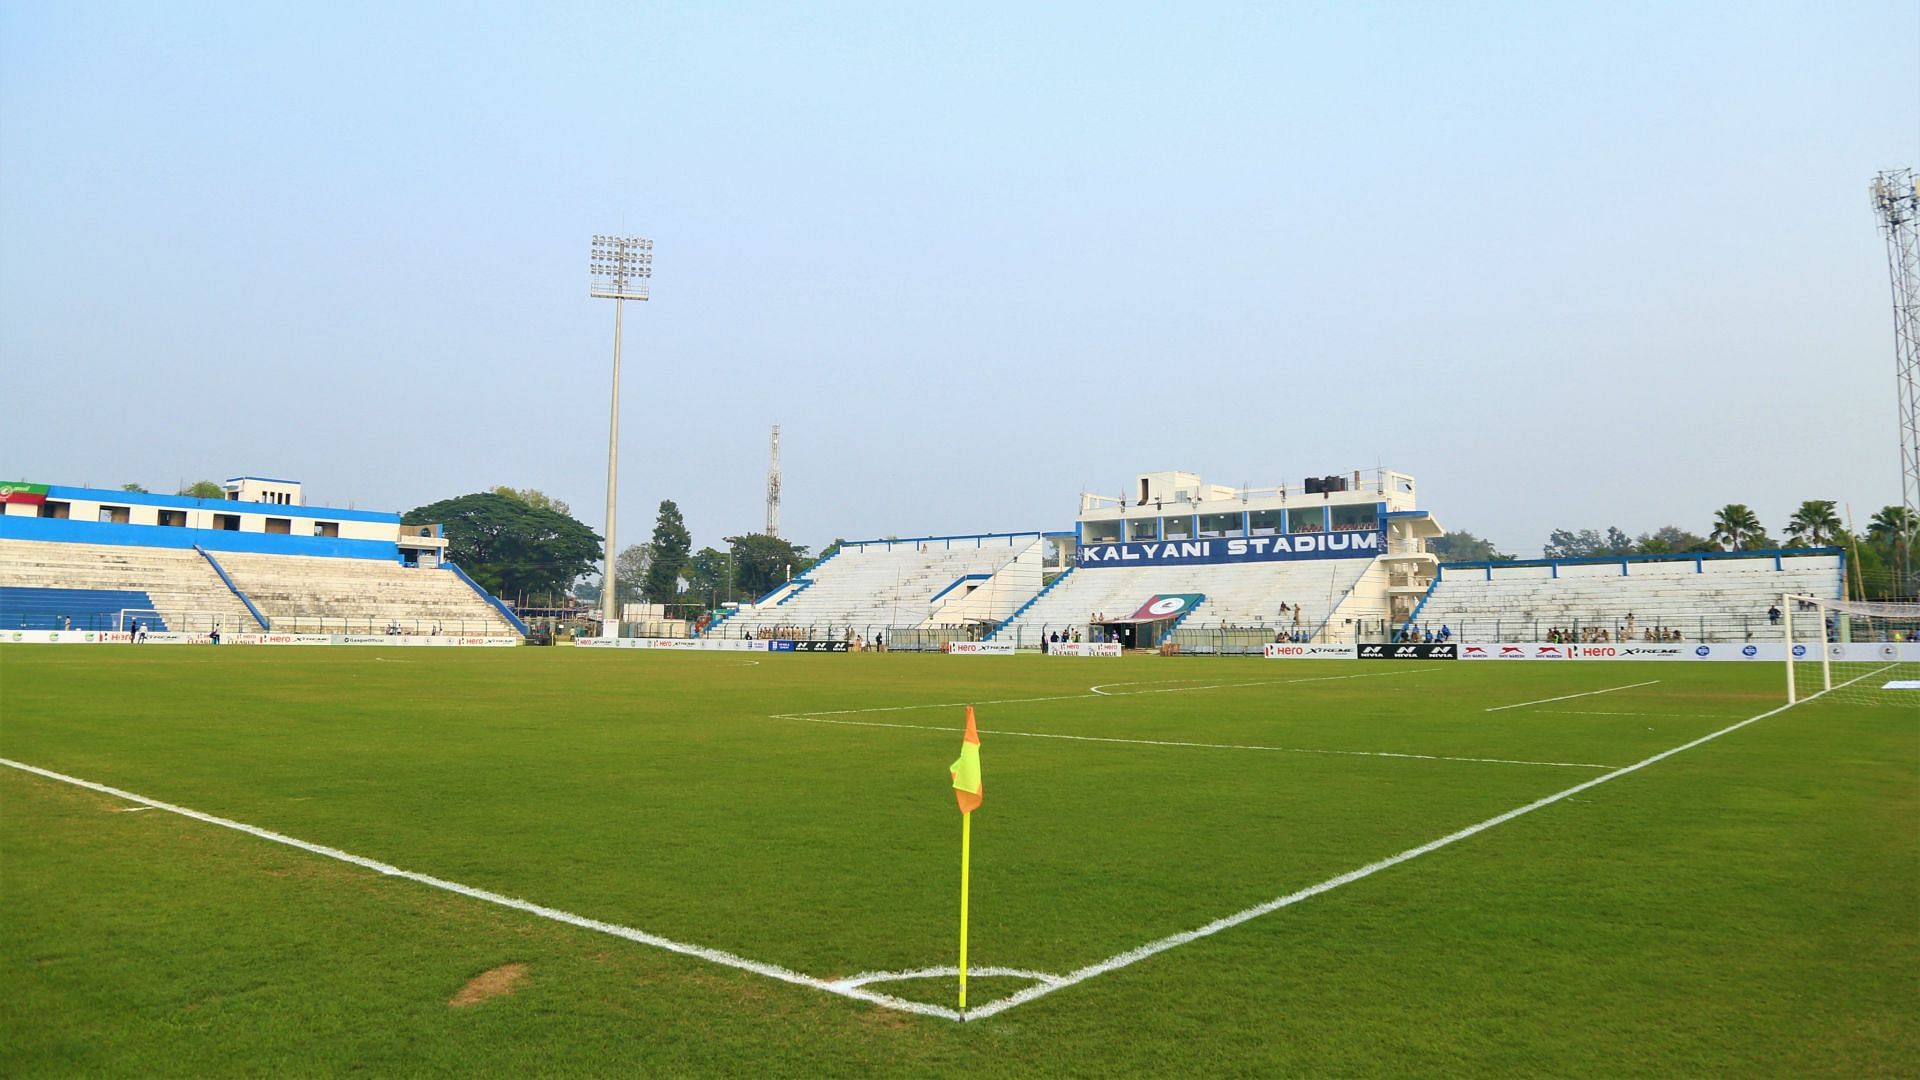 A view of the Kalyani Stadium in Kolkata - Image Courtesy: I-League Twitter